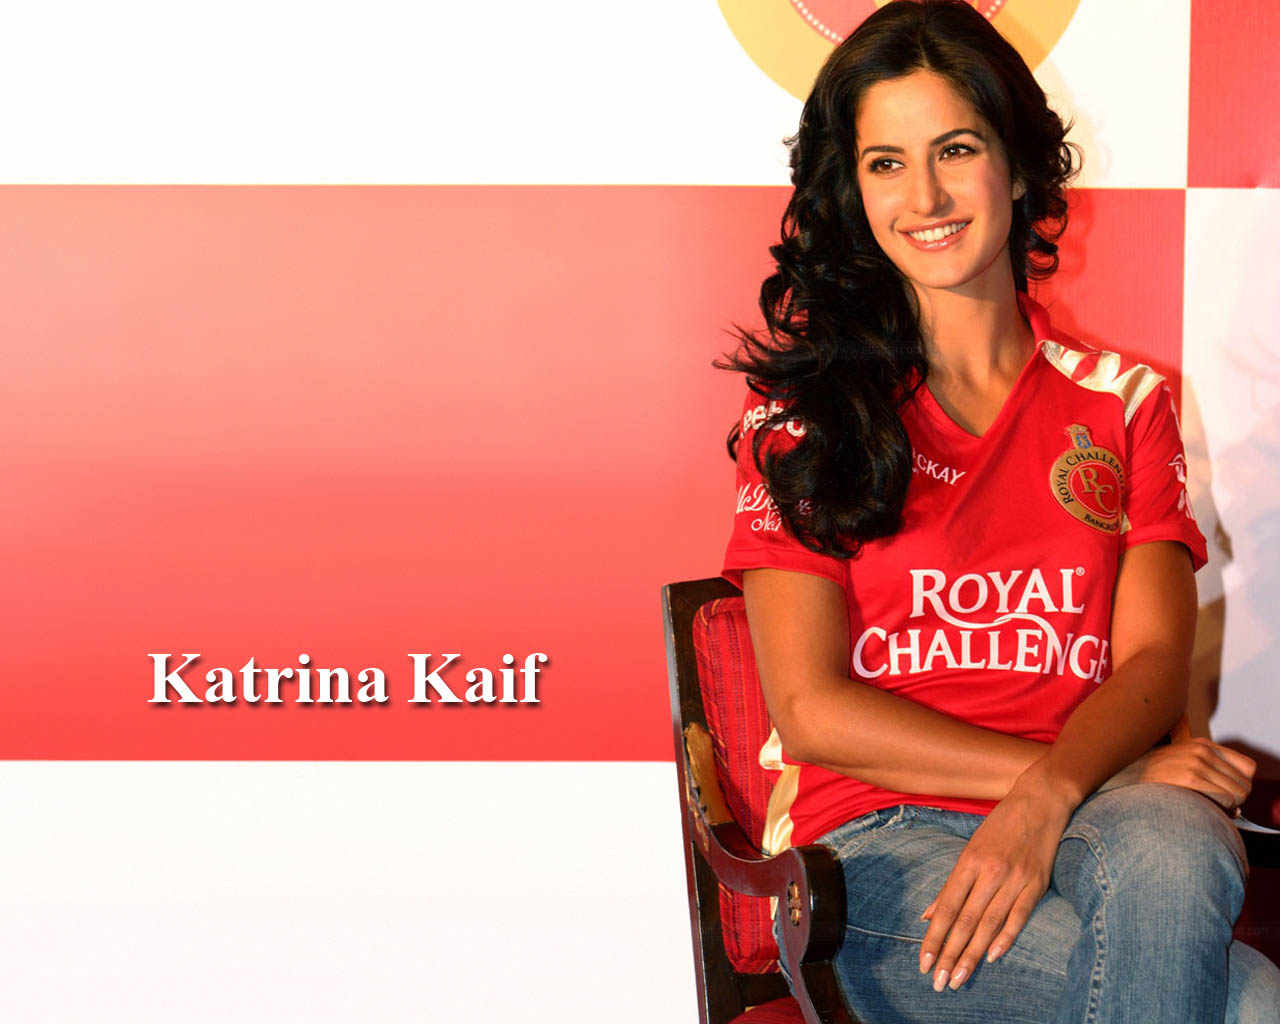 KATRINA KAIF WALLPAPERS: Katrina Kaif Widescreen Wallpapers